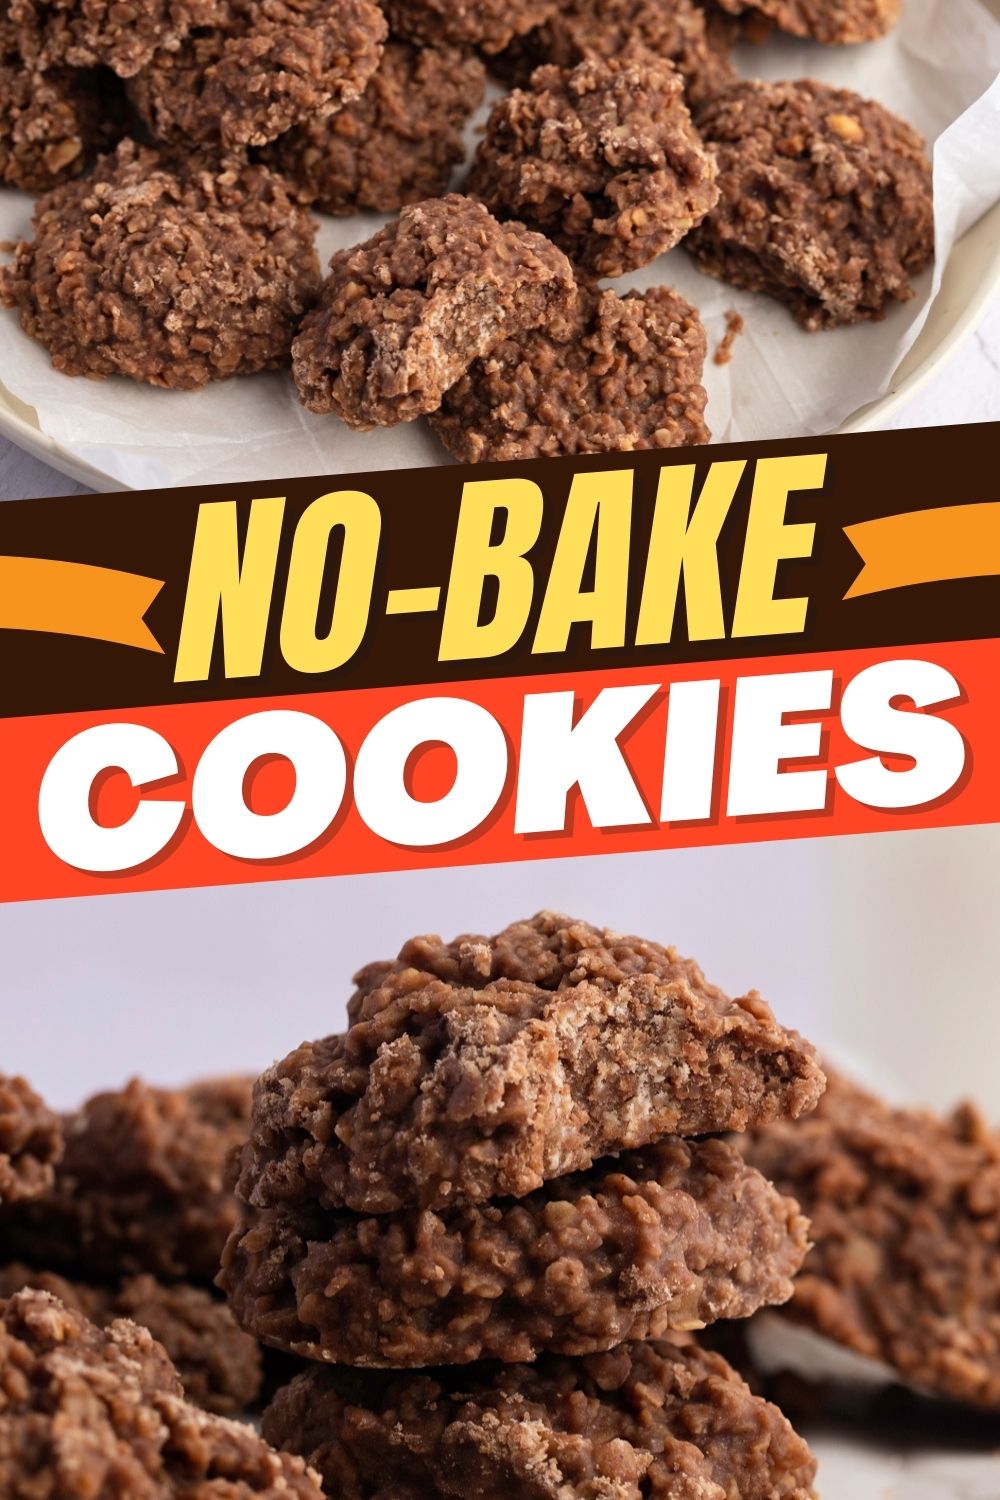 No-Bake Cookies